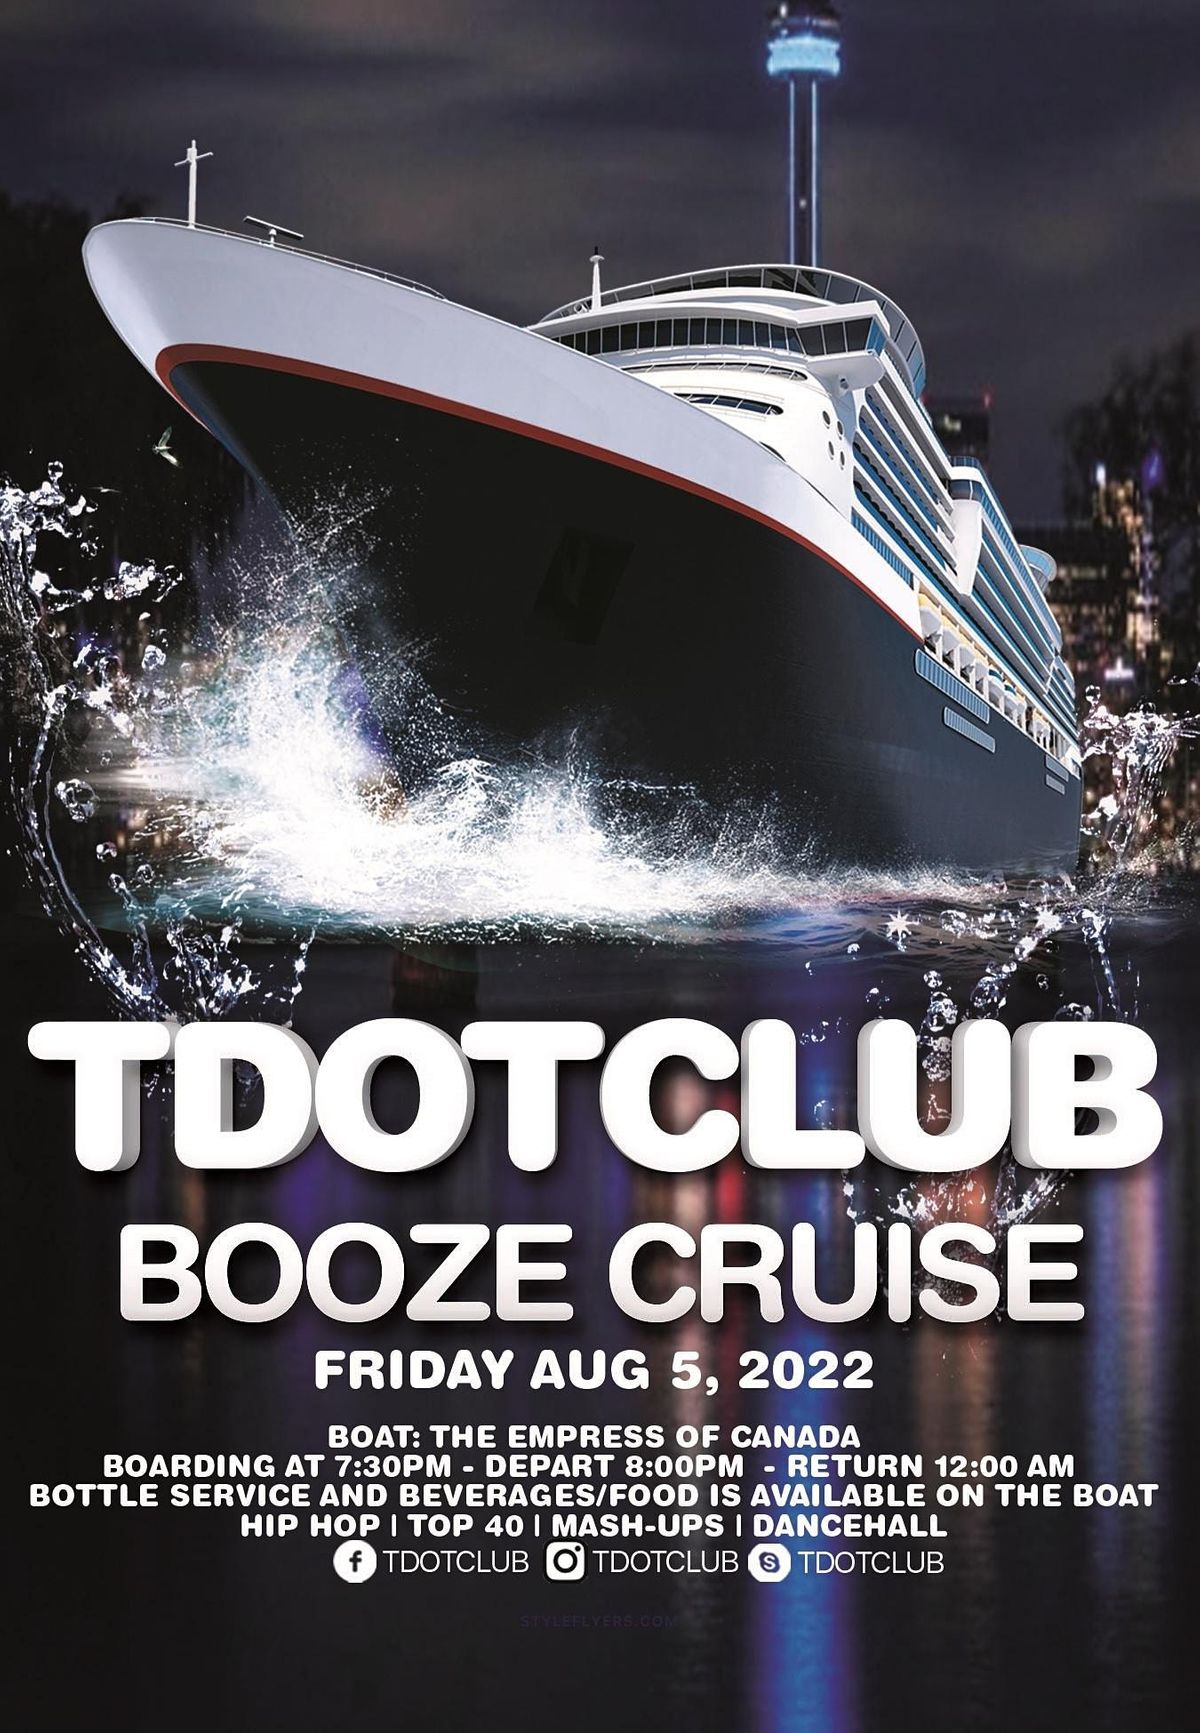 Toronto Booze Cruise August 5th